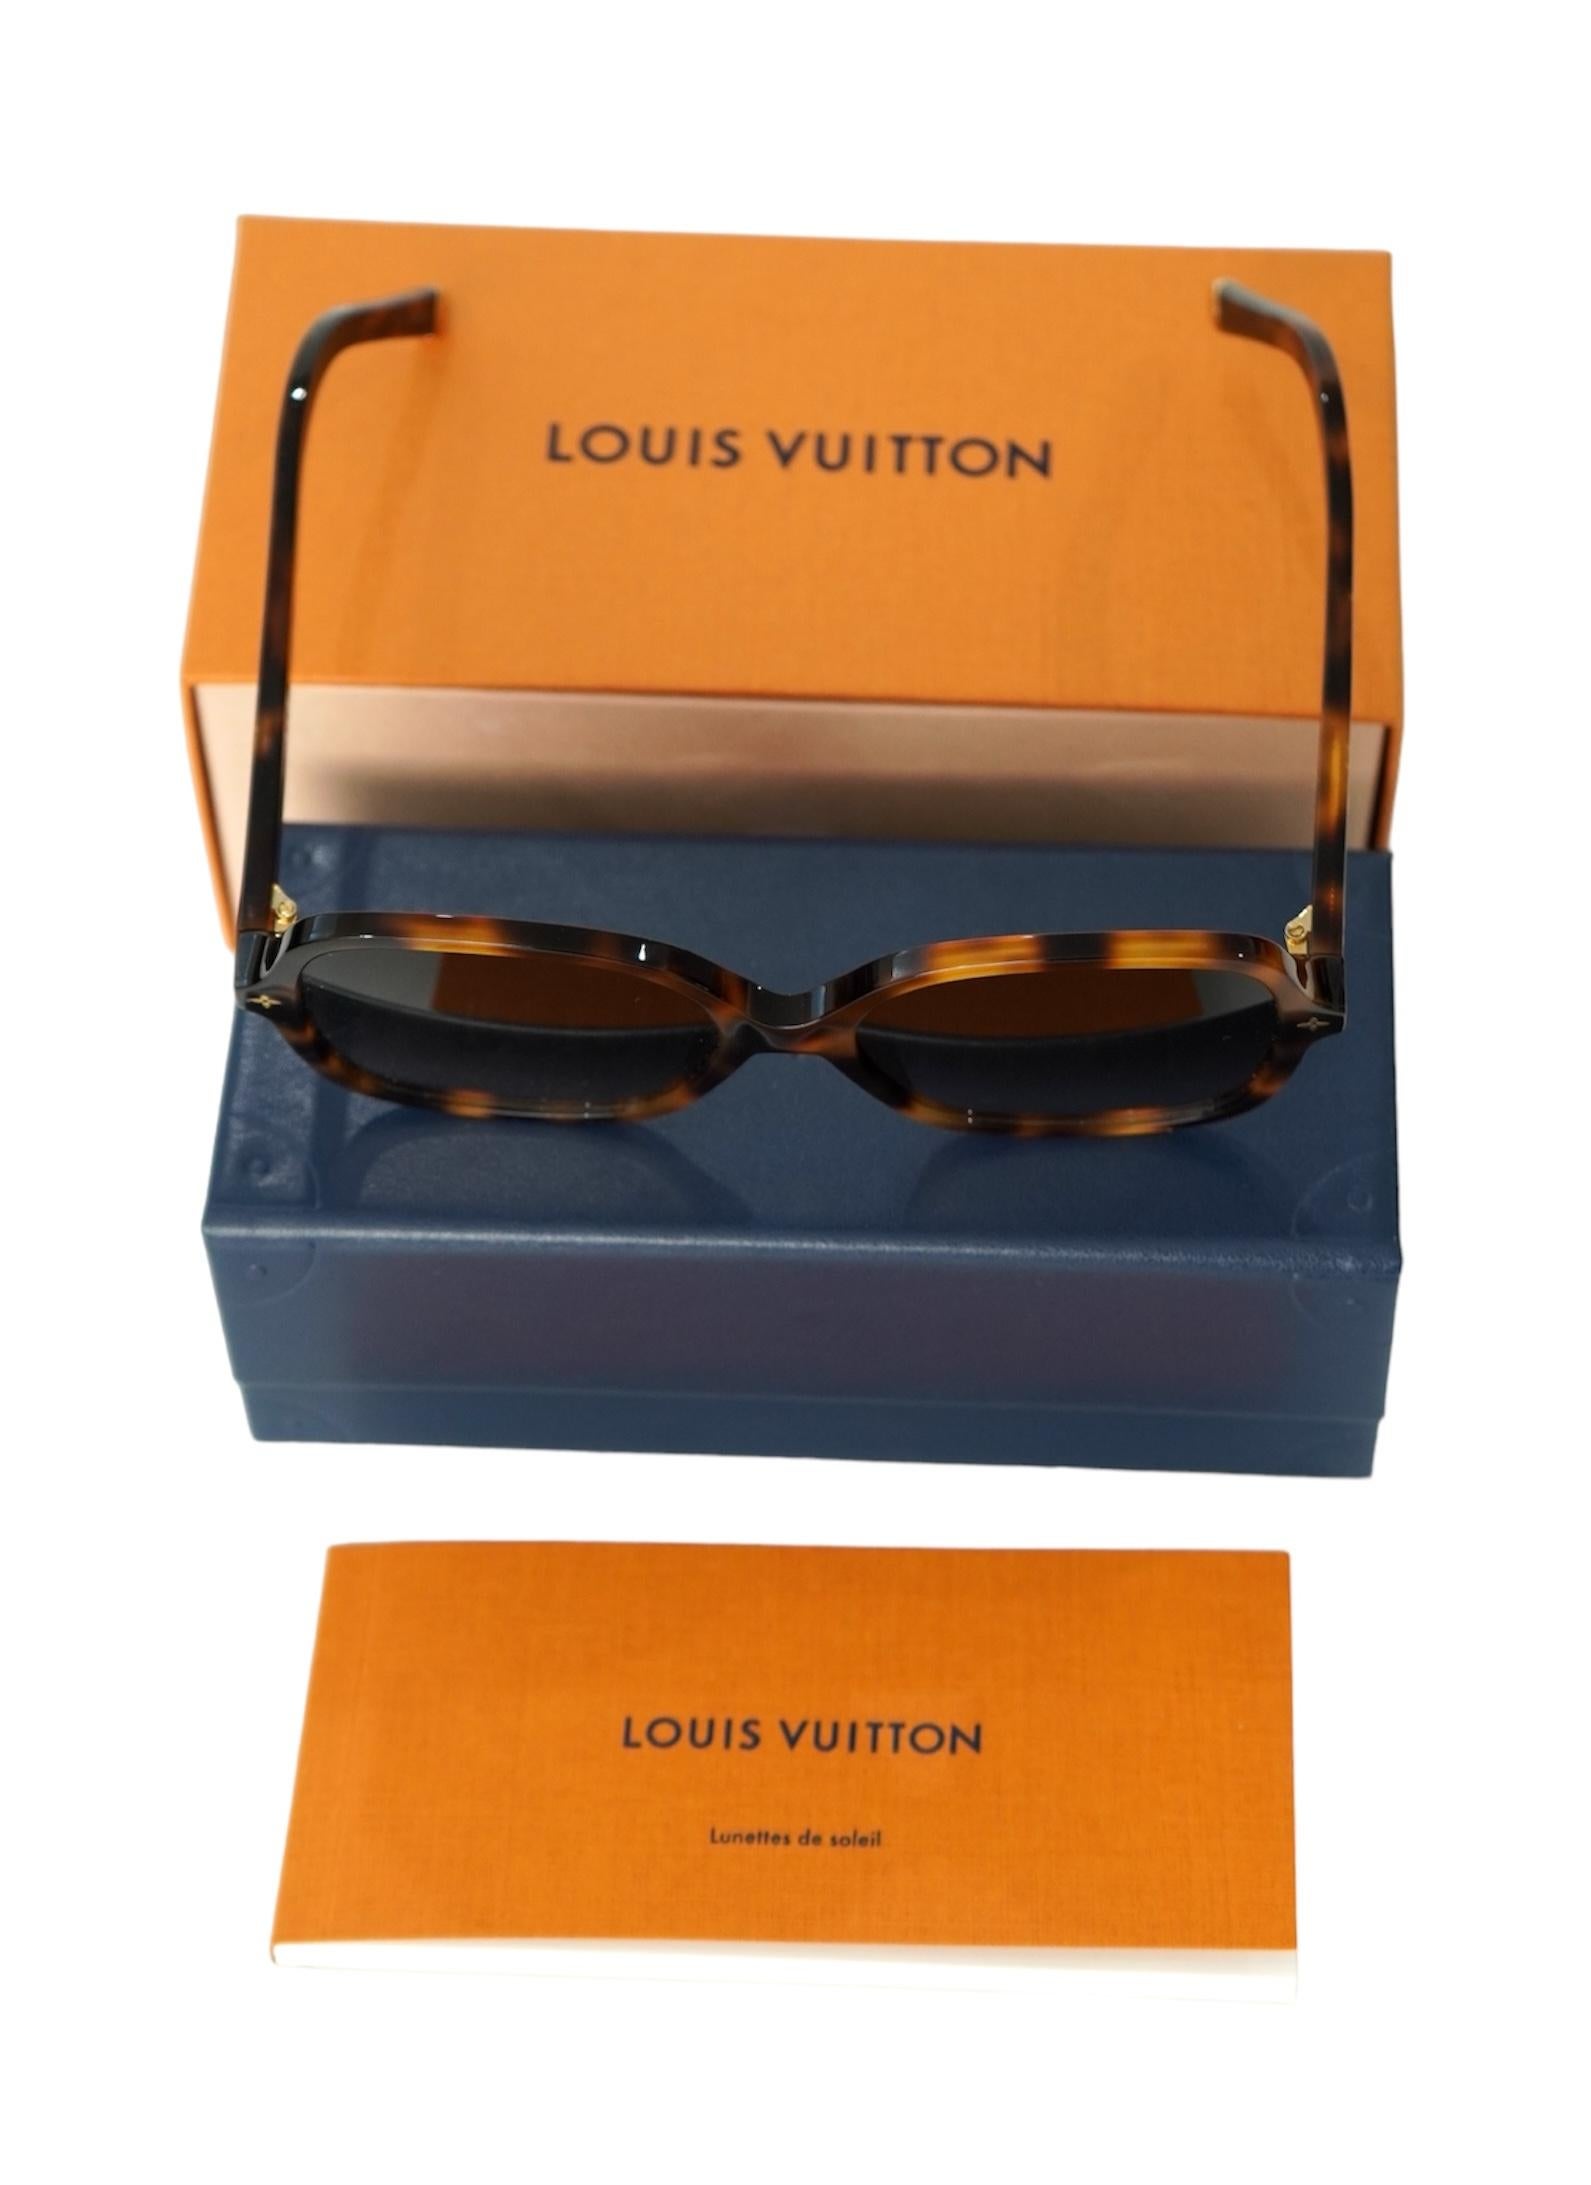 Louis Vuitton Monogram Tortoise Sunglasses

Frame width 5.75